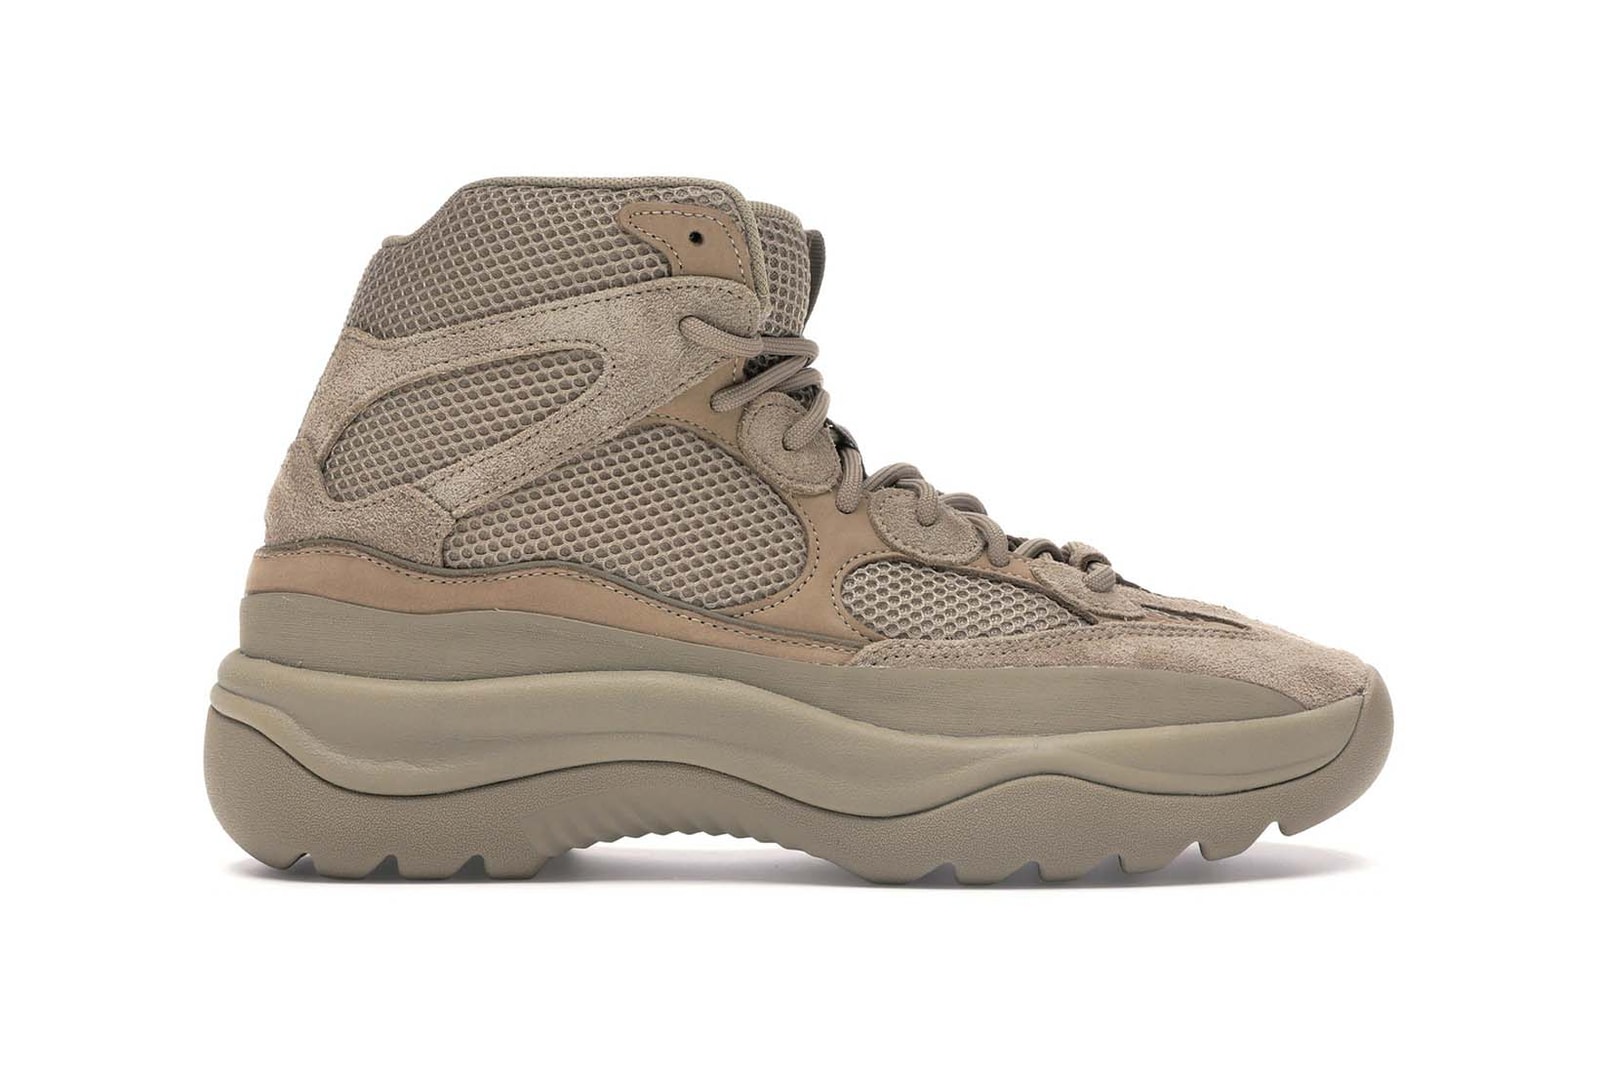 March Sneaker Releases Nike Air Jordan New Balance Reebok adidas YEEZY